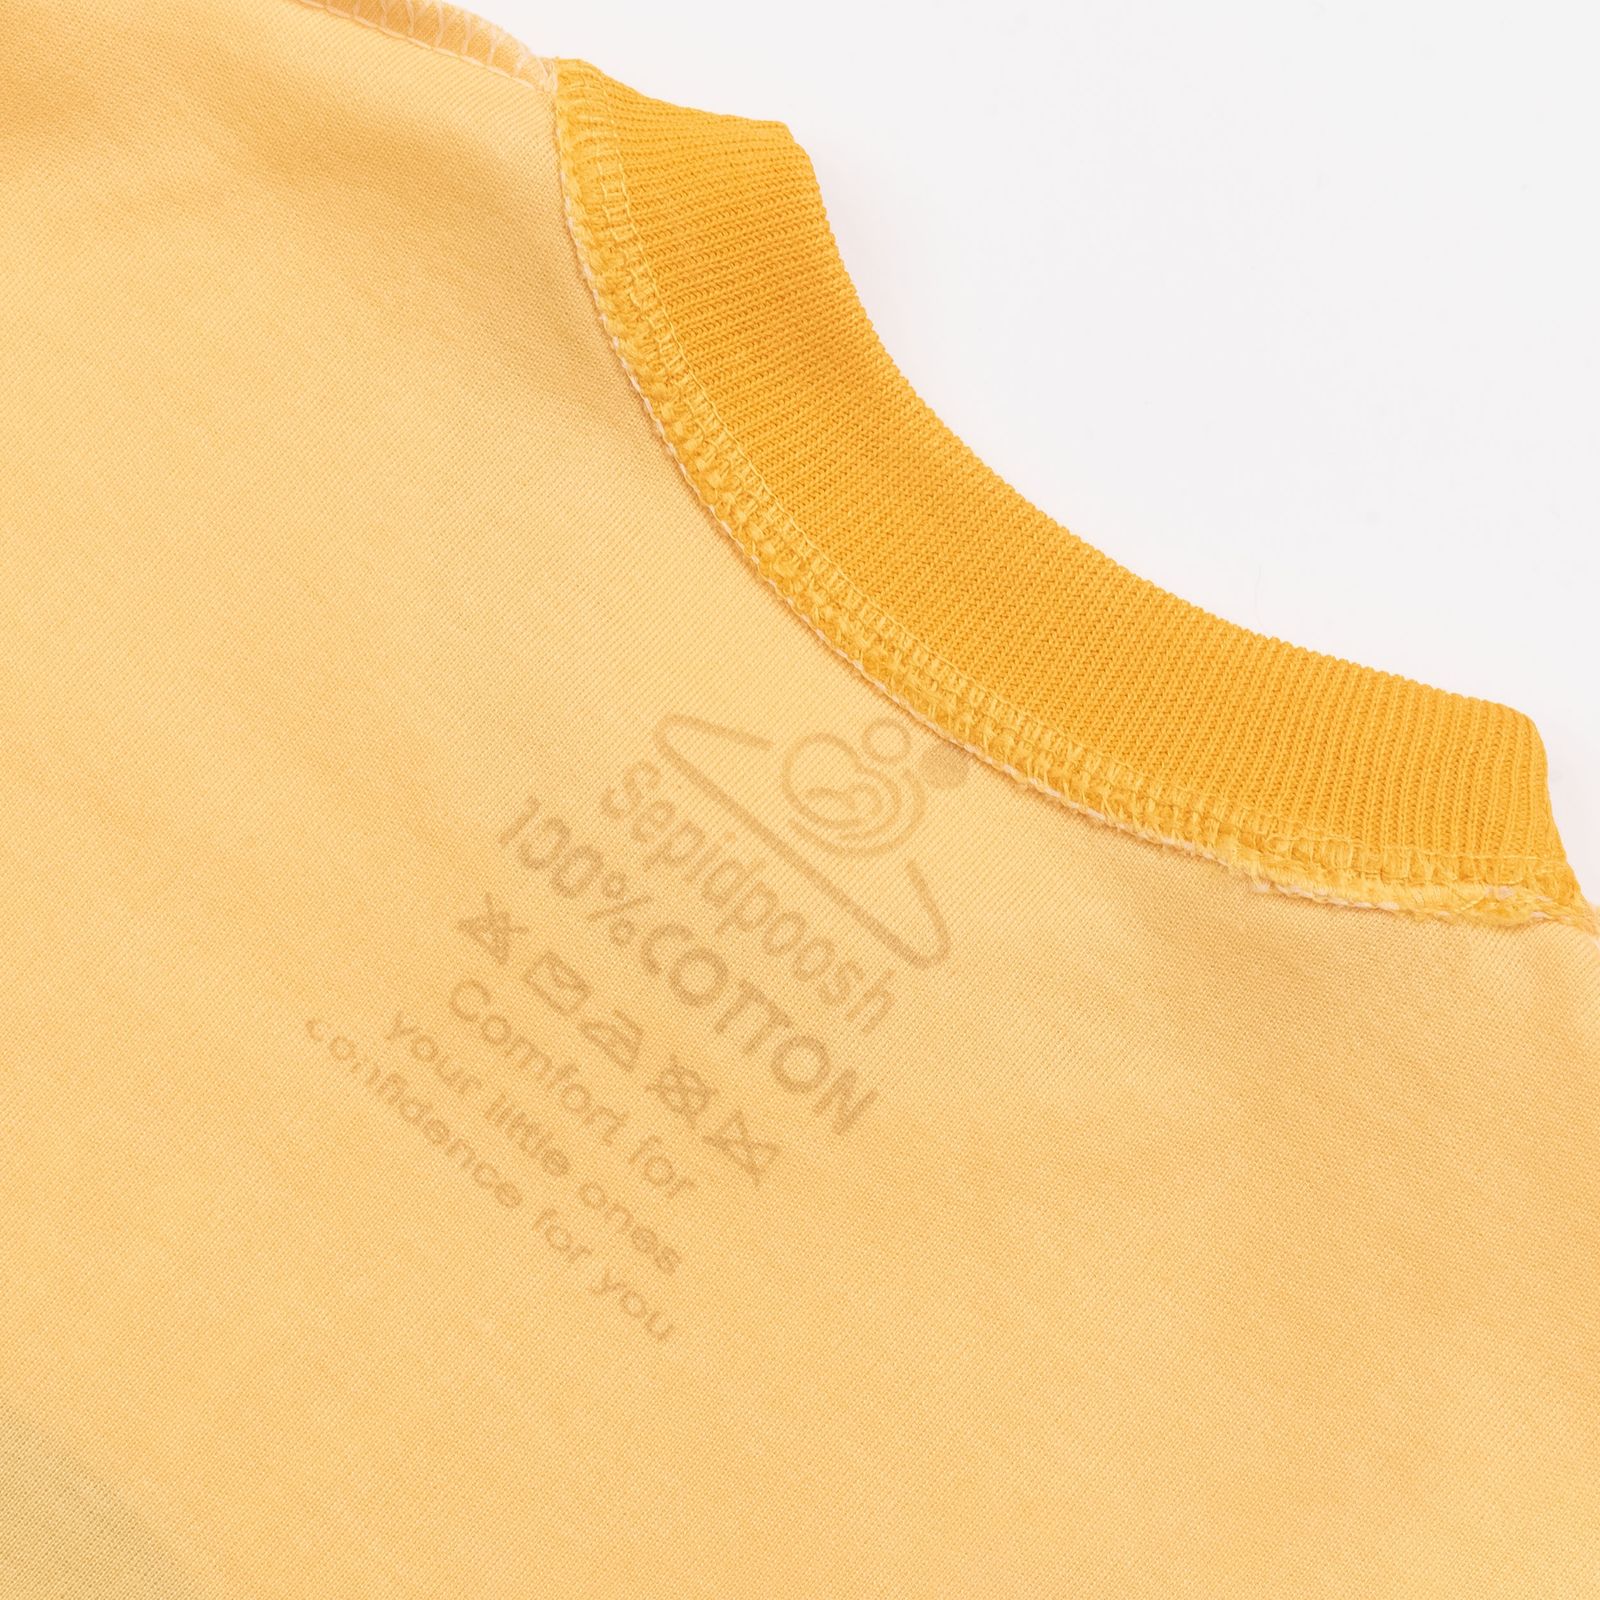 ست تی شرت آستین کوتاه و شلوارک بچگانه سپیدپوش مدل اسنوپی کد 1402514 -  - 3